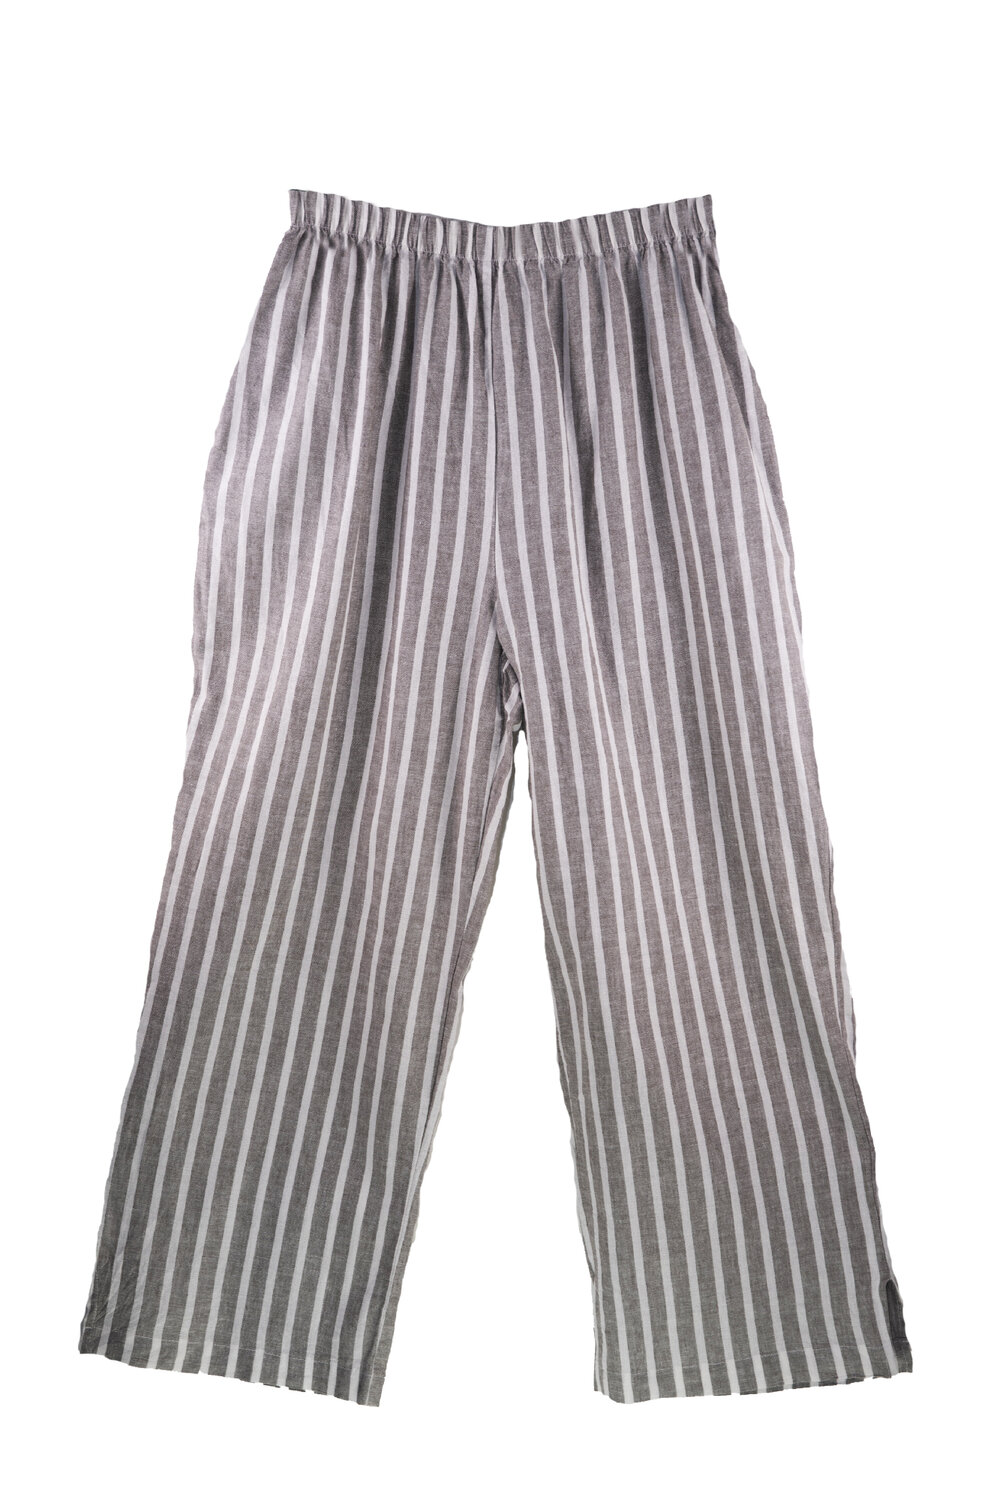 Striped Linen Pants in Dark Heather Grey — LeParisPetit by I love